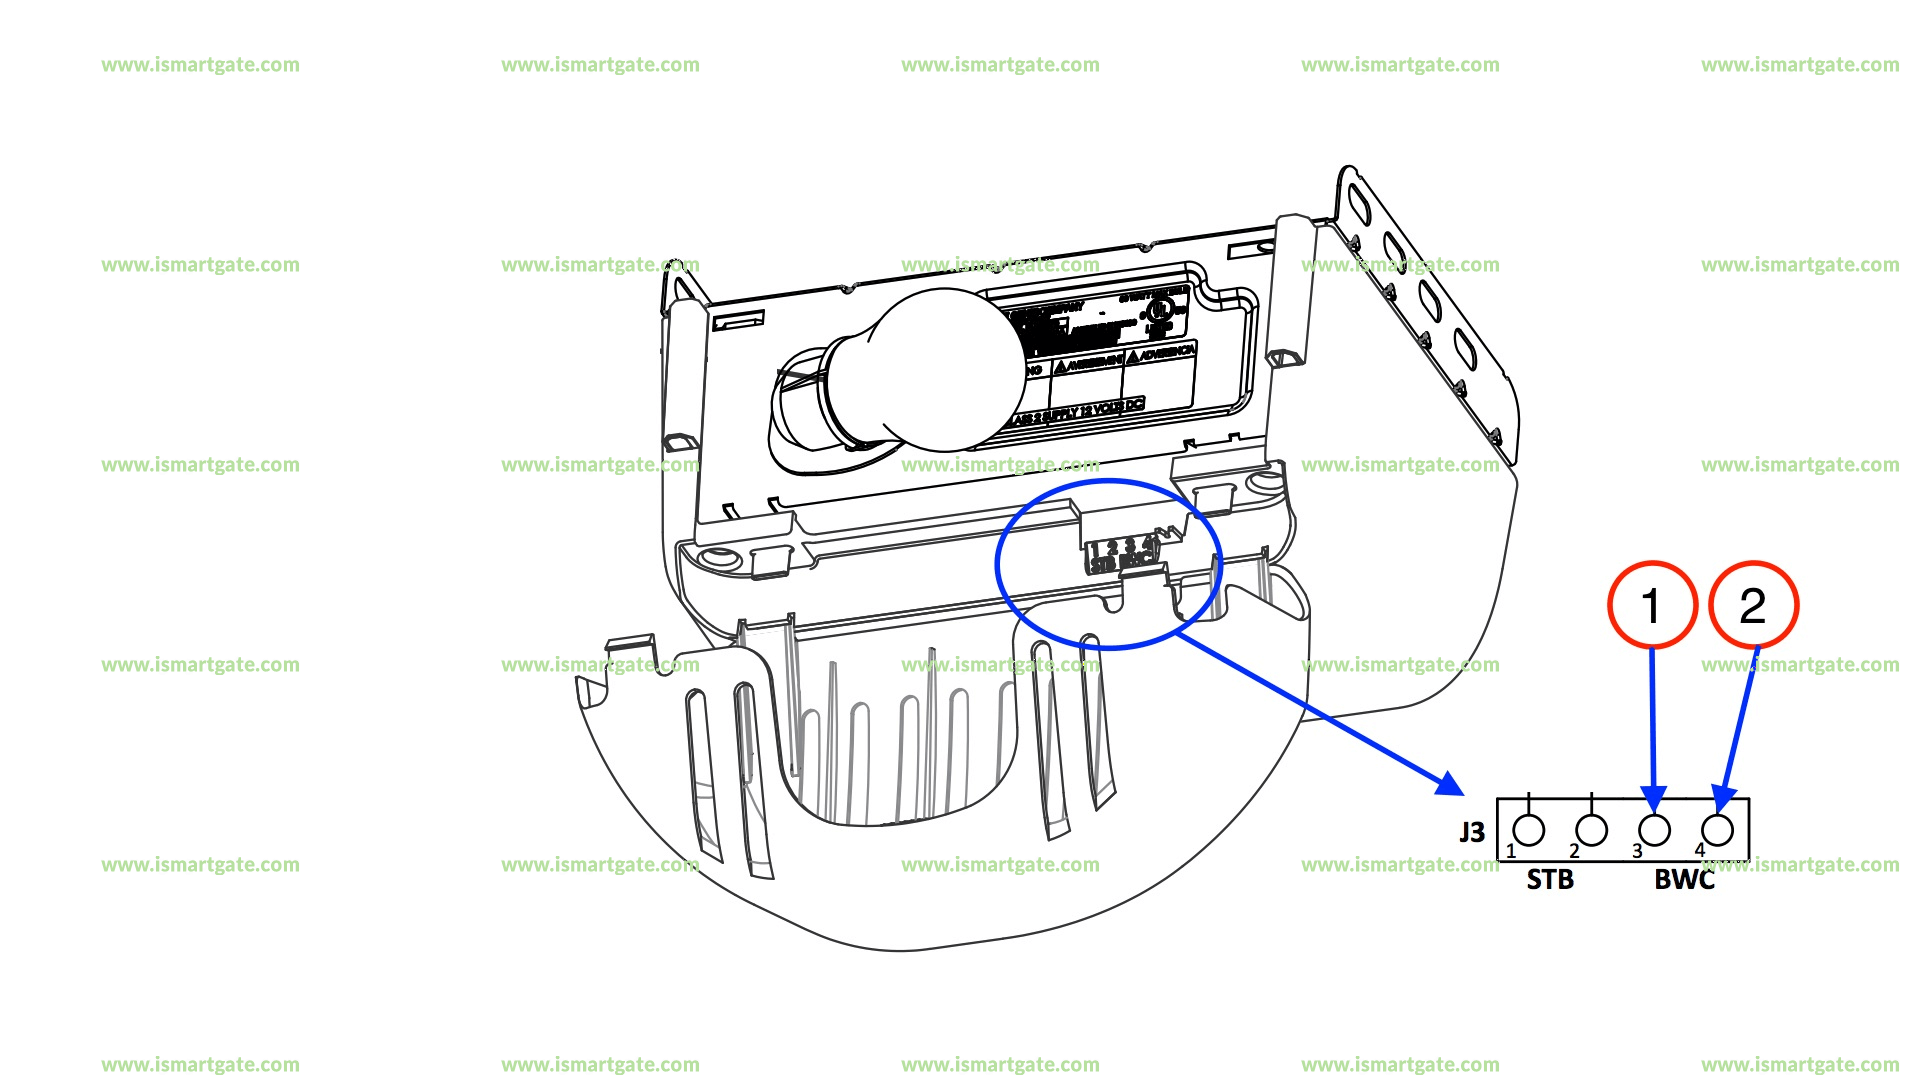 Wiring diagram for GENIE Model 2128